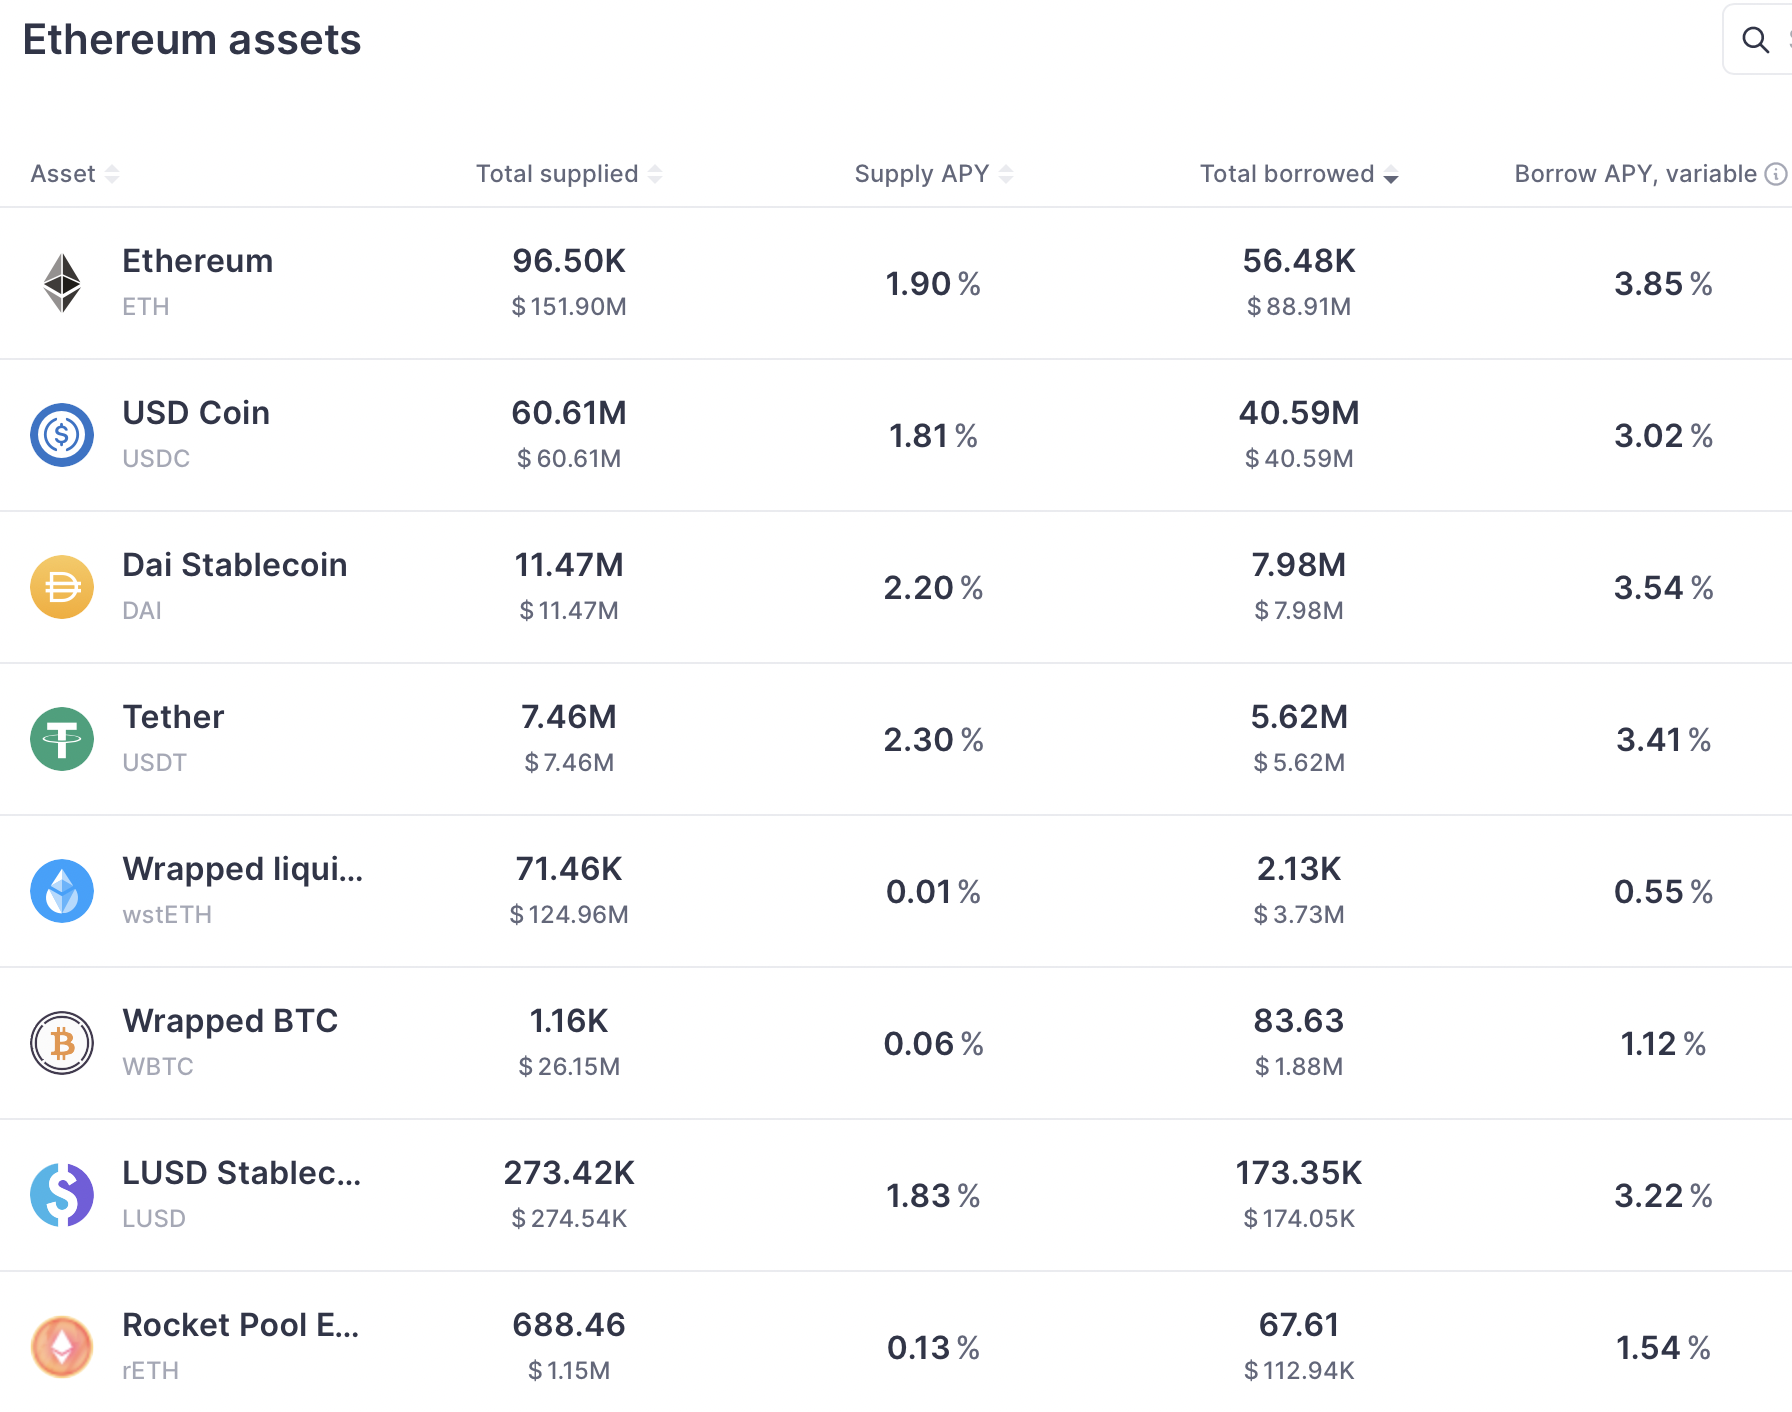 Popular assets in AAVE V3 deployment on Ethereum